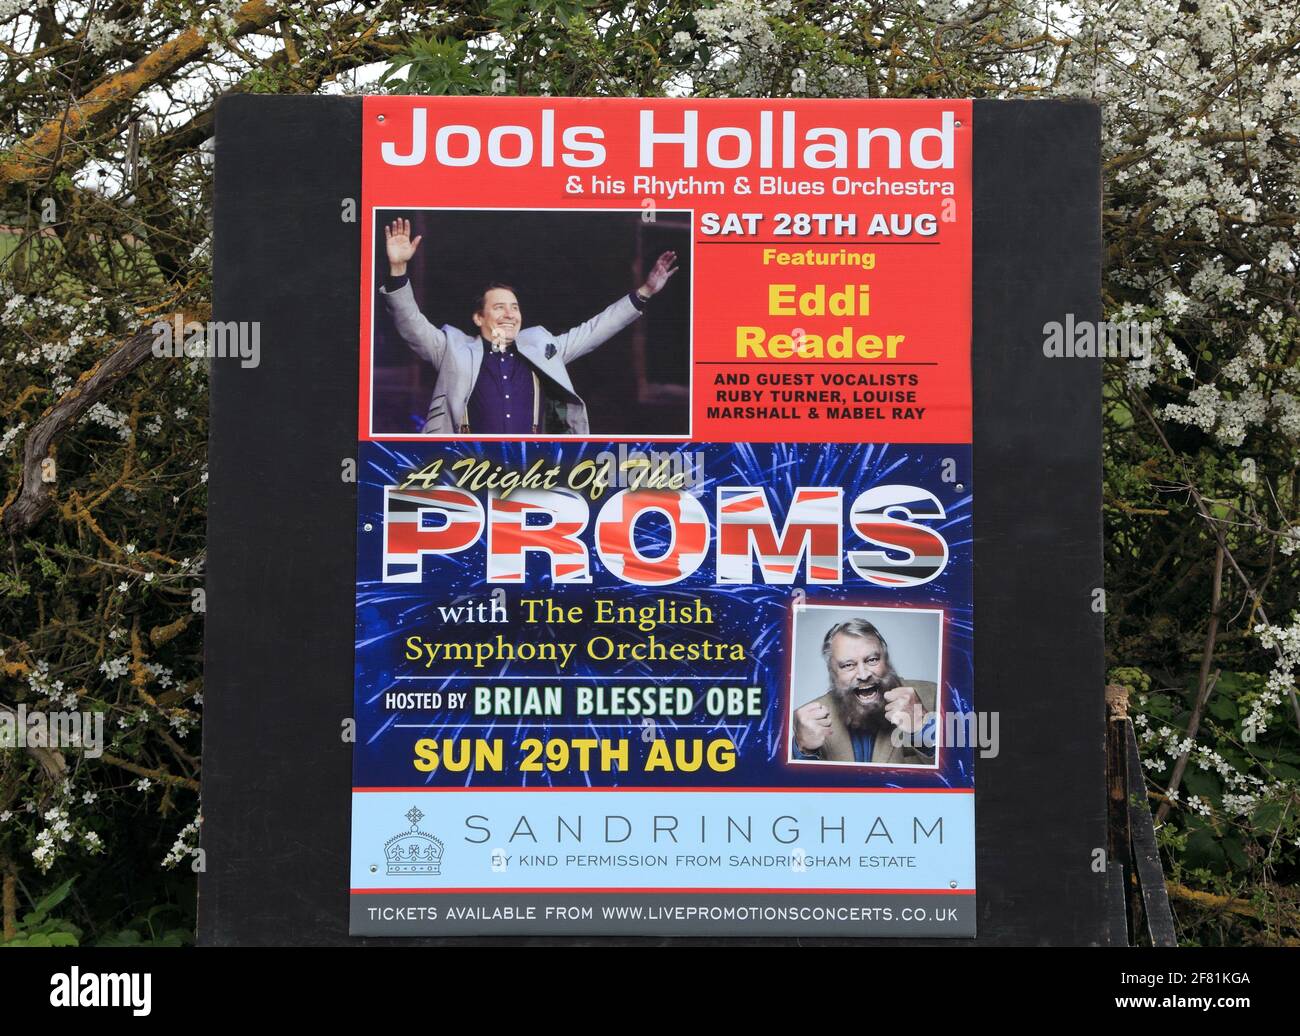 Jools Holland, Proms, Straßenrand, Werbeplakat, Konzert, 28. August 2021, Sandringham, Norfolk, England Stockfoto